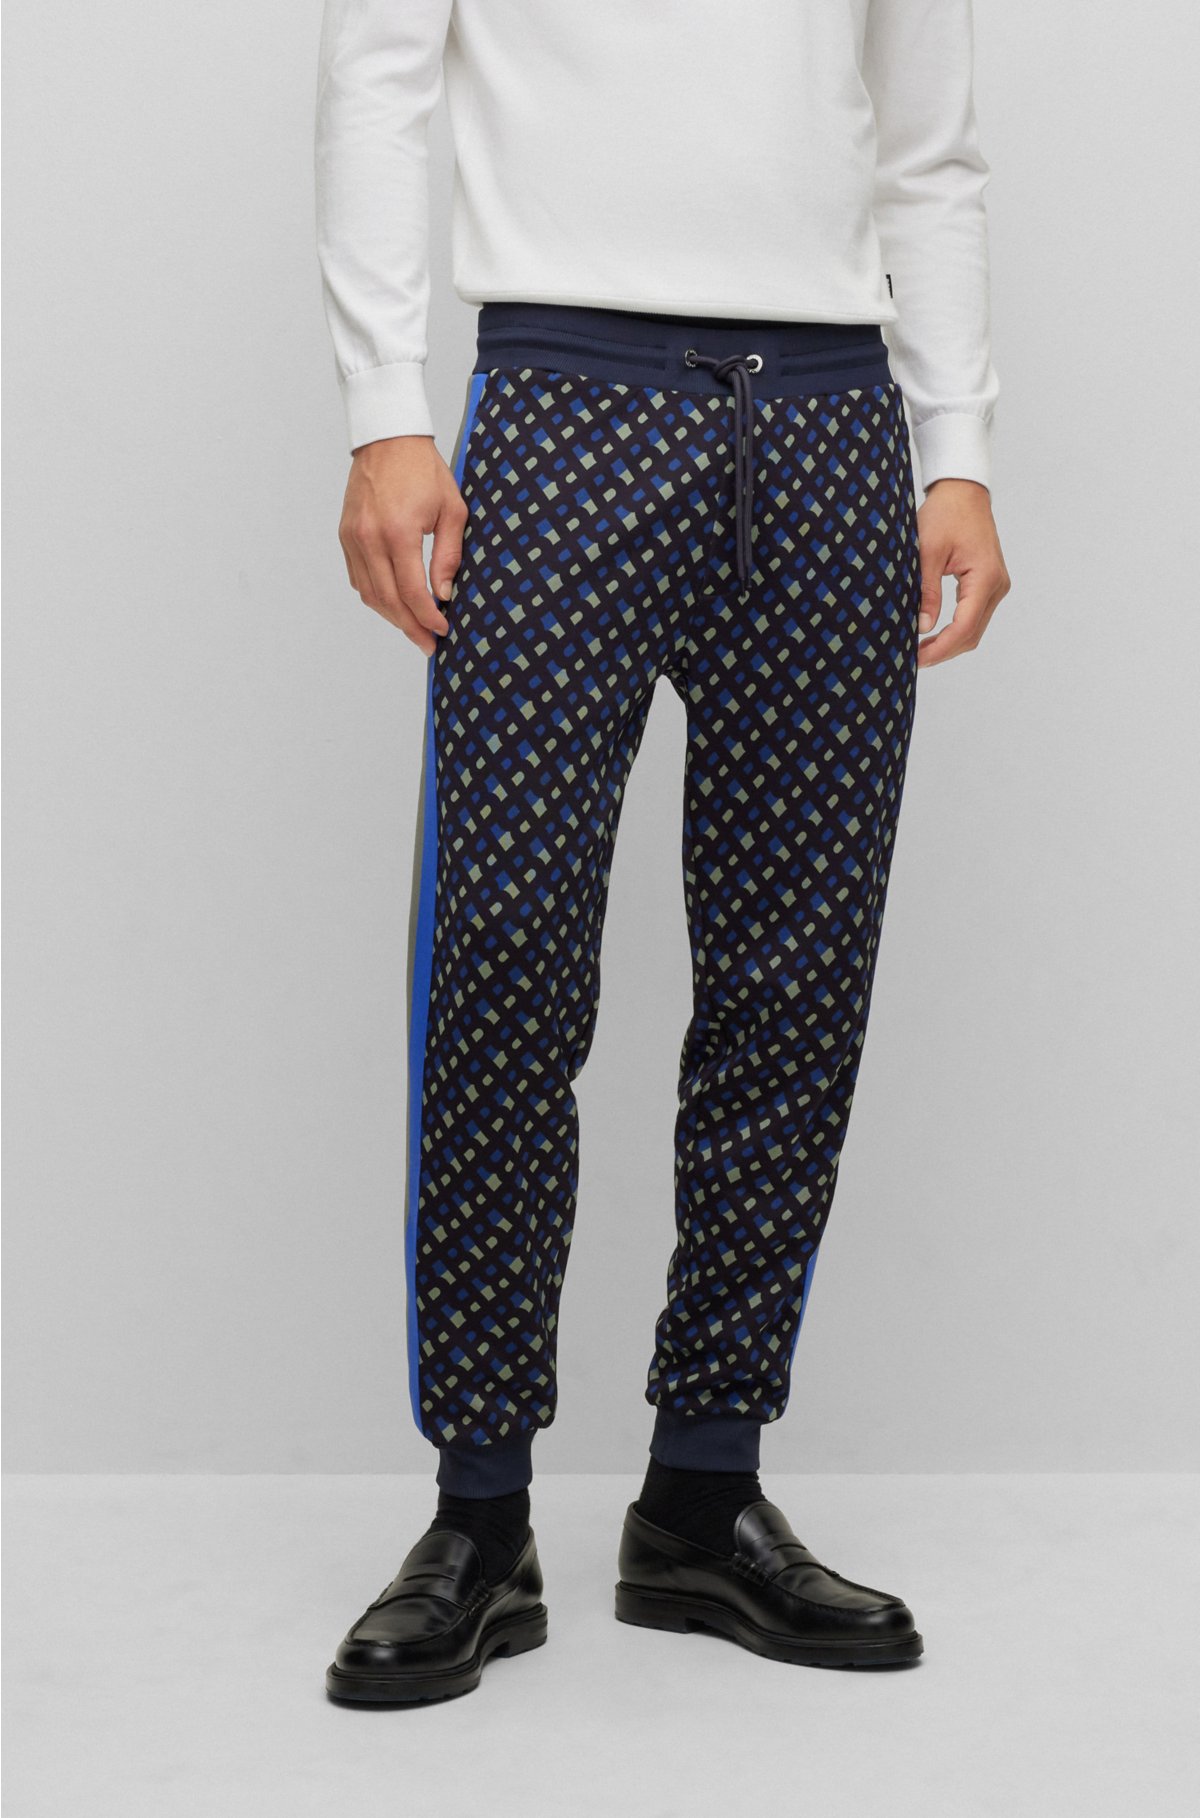 Louis Vuitton Cashmere Sweatpants - Grey Loungewear, Clothing